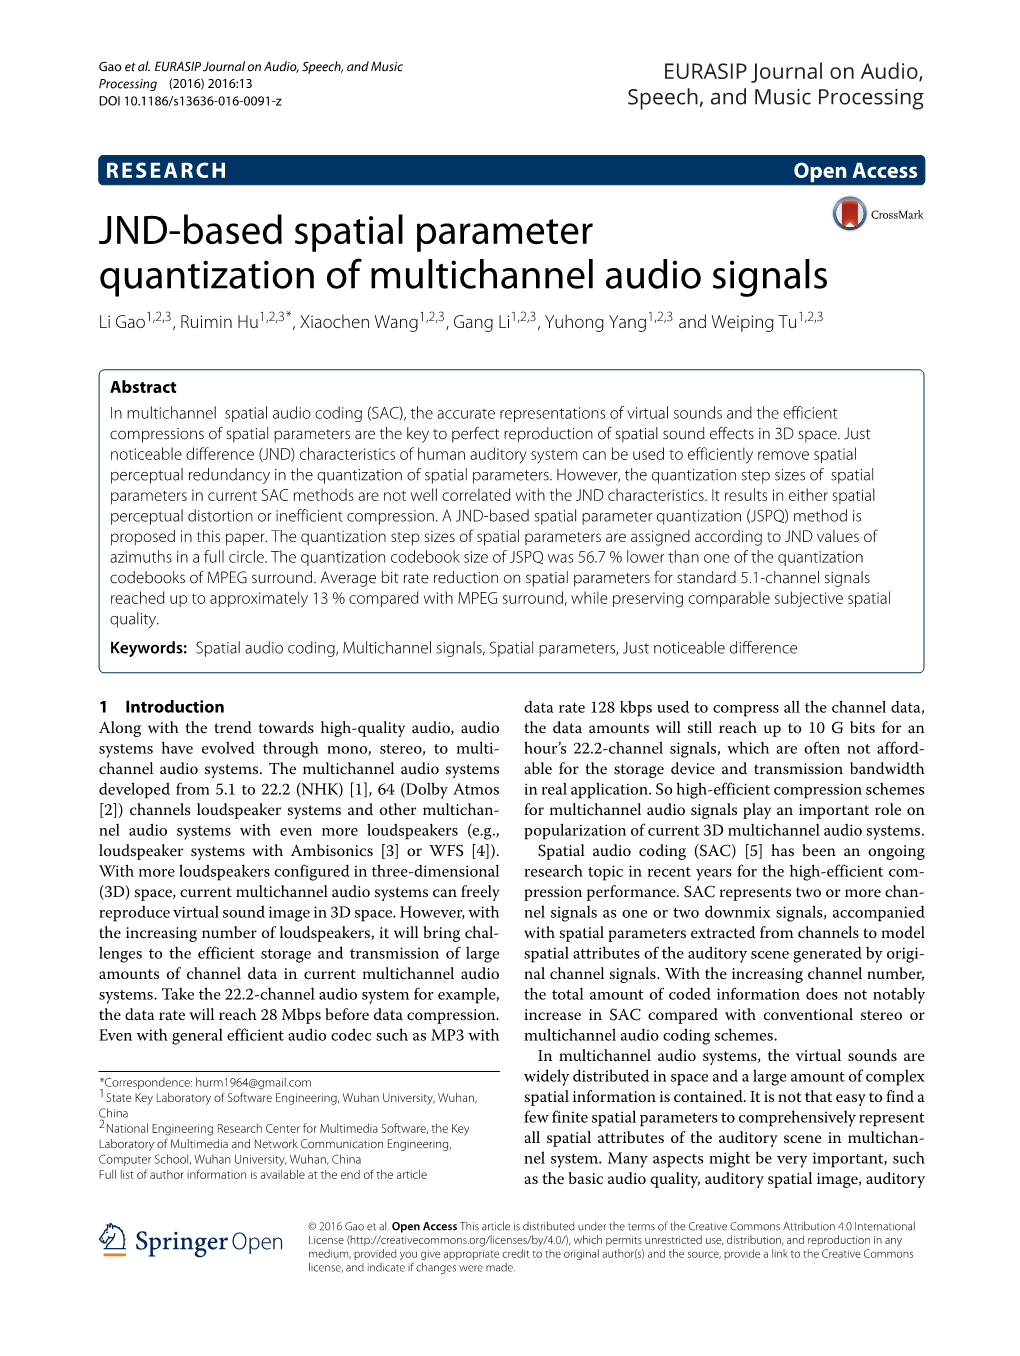 JND Based Spatial Parameters Quantization of Multichannel Audio